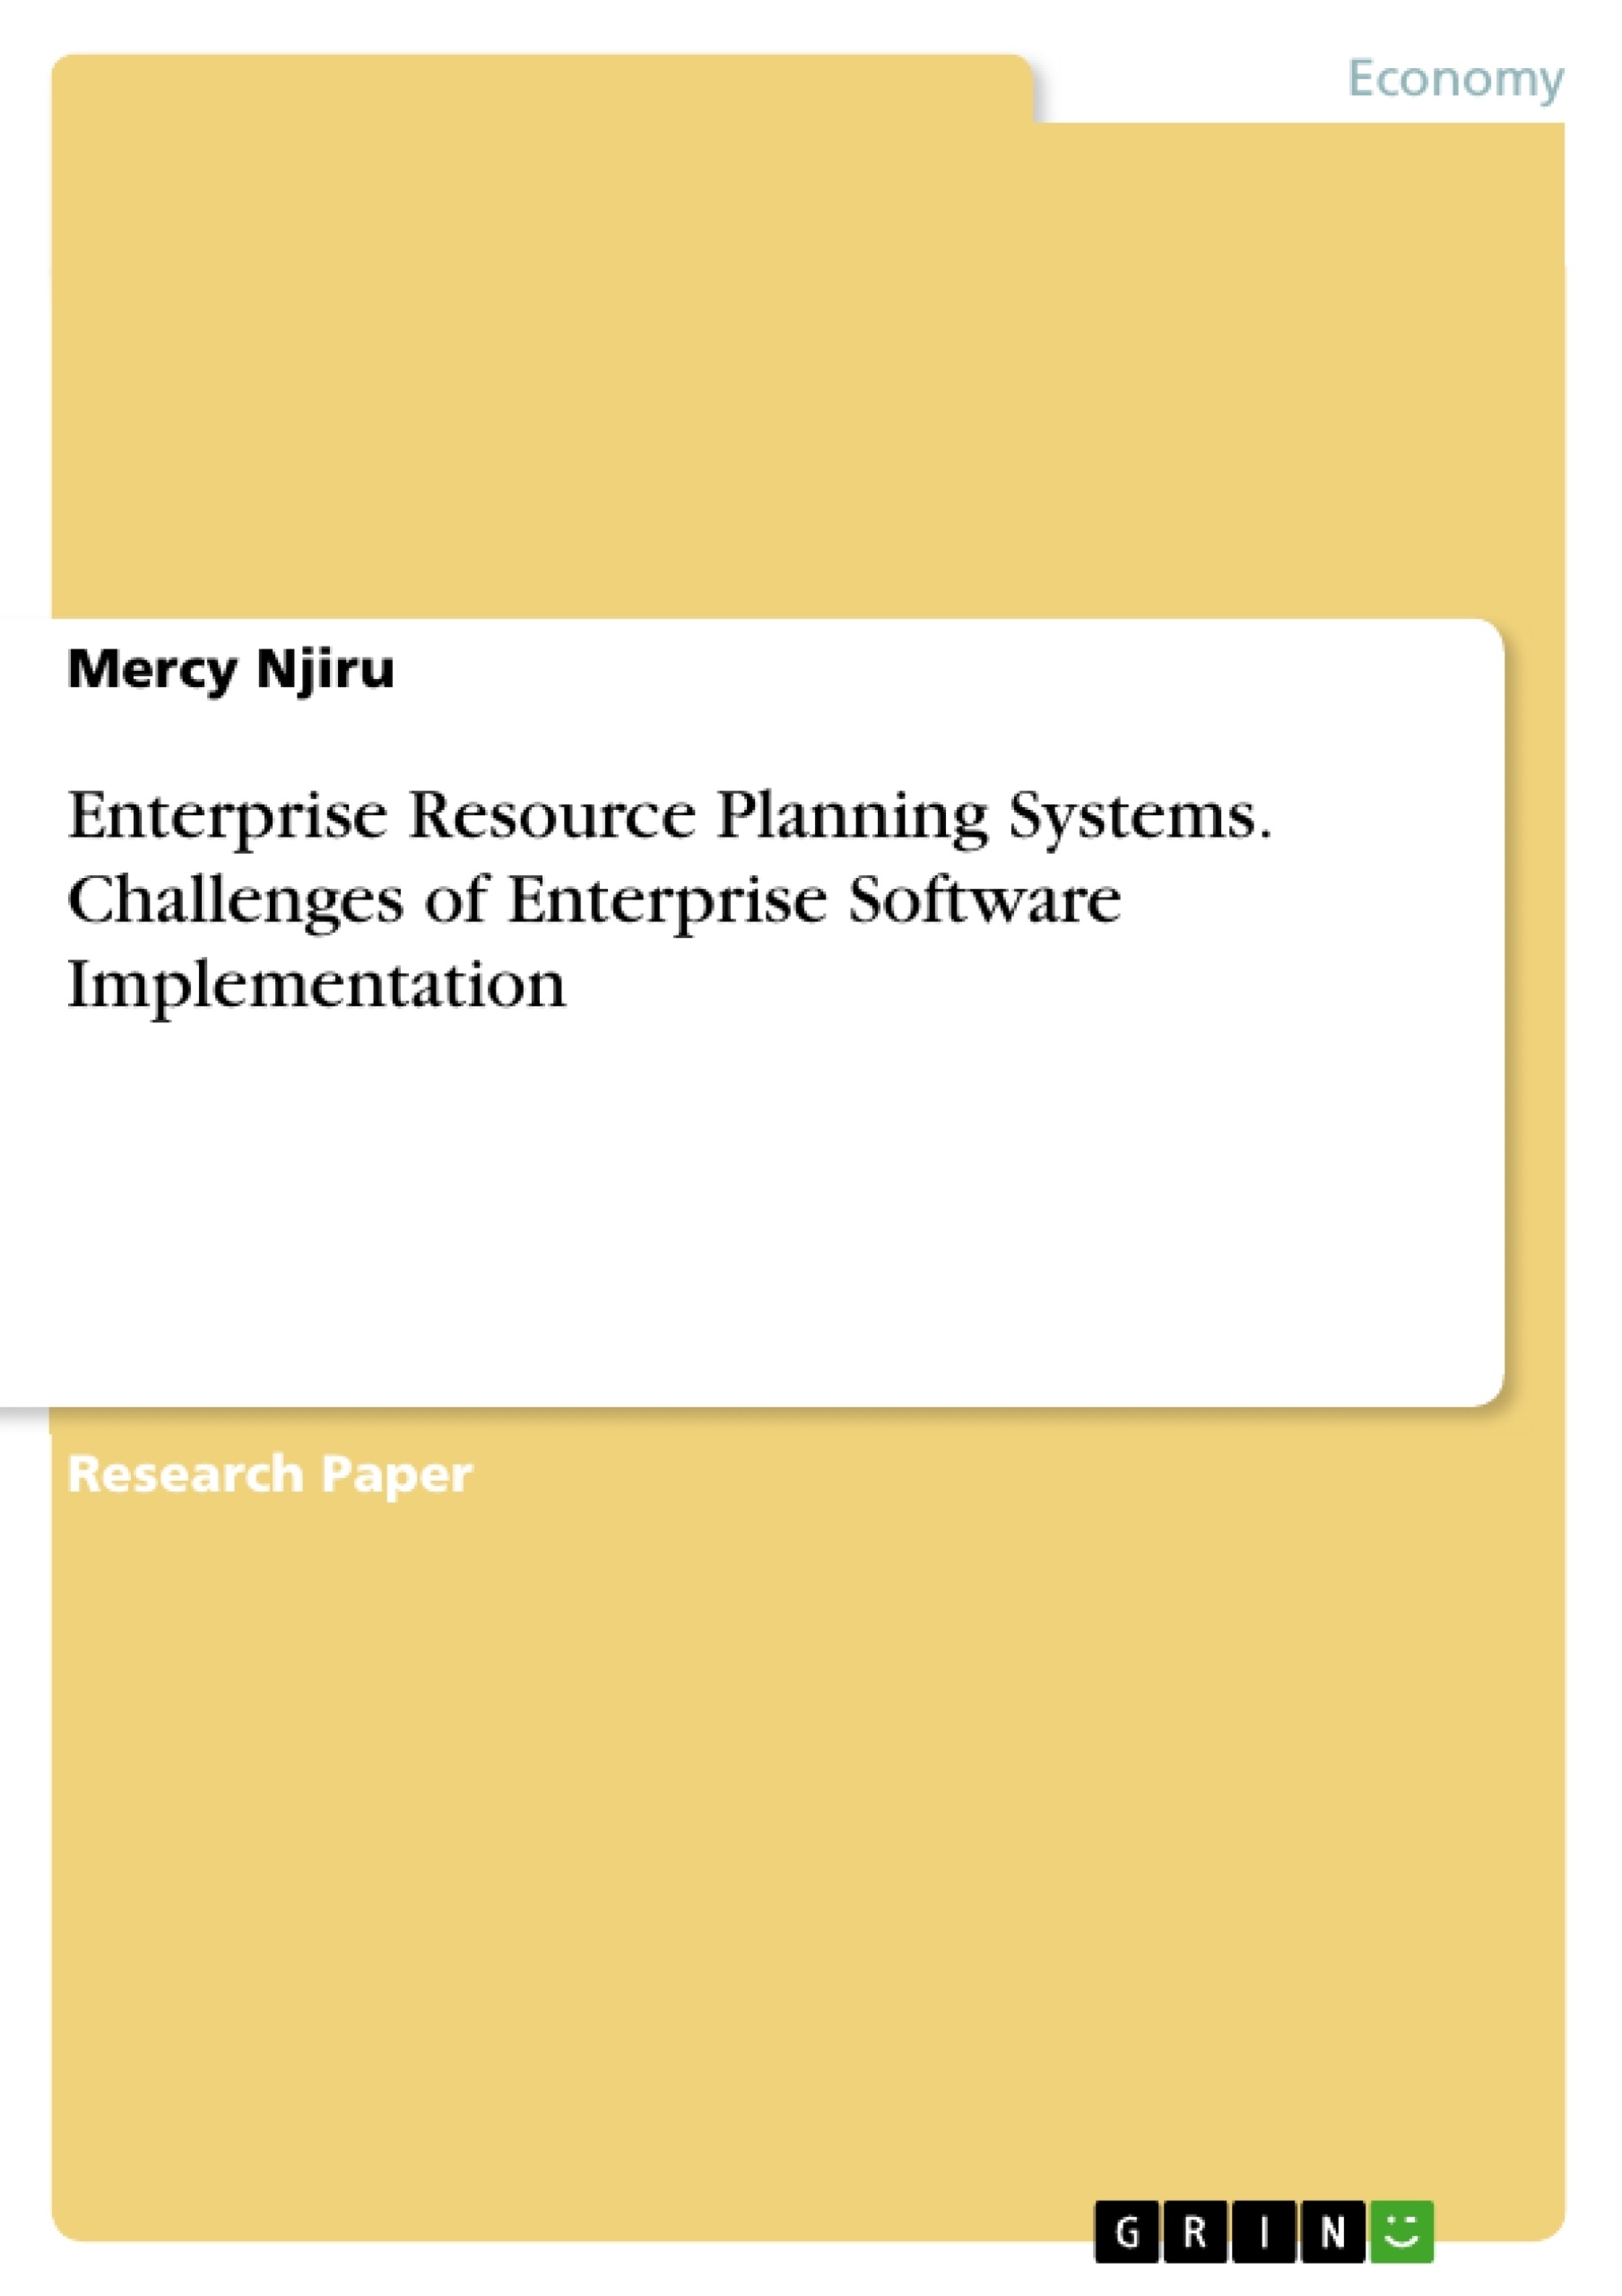 Title: Enterprise Resource Planning Systems. Challenges of Enterprise Software Implementation